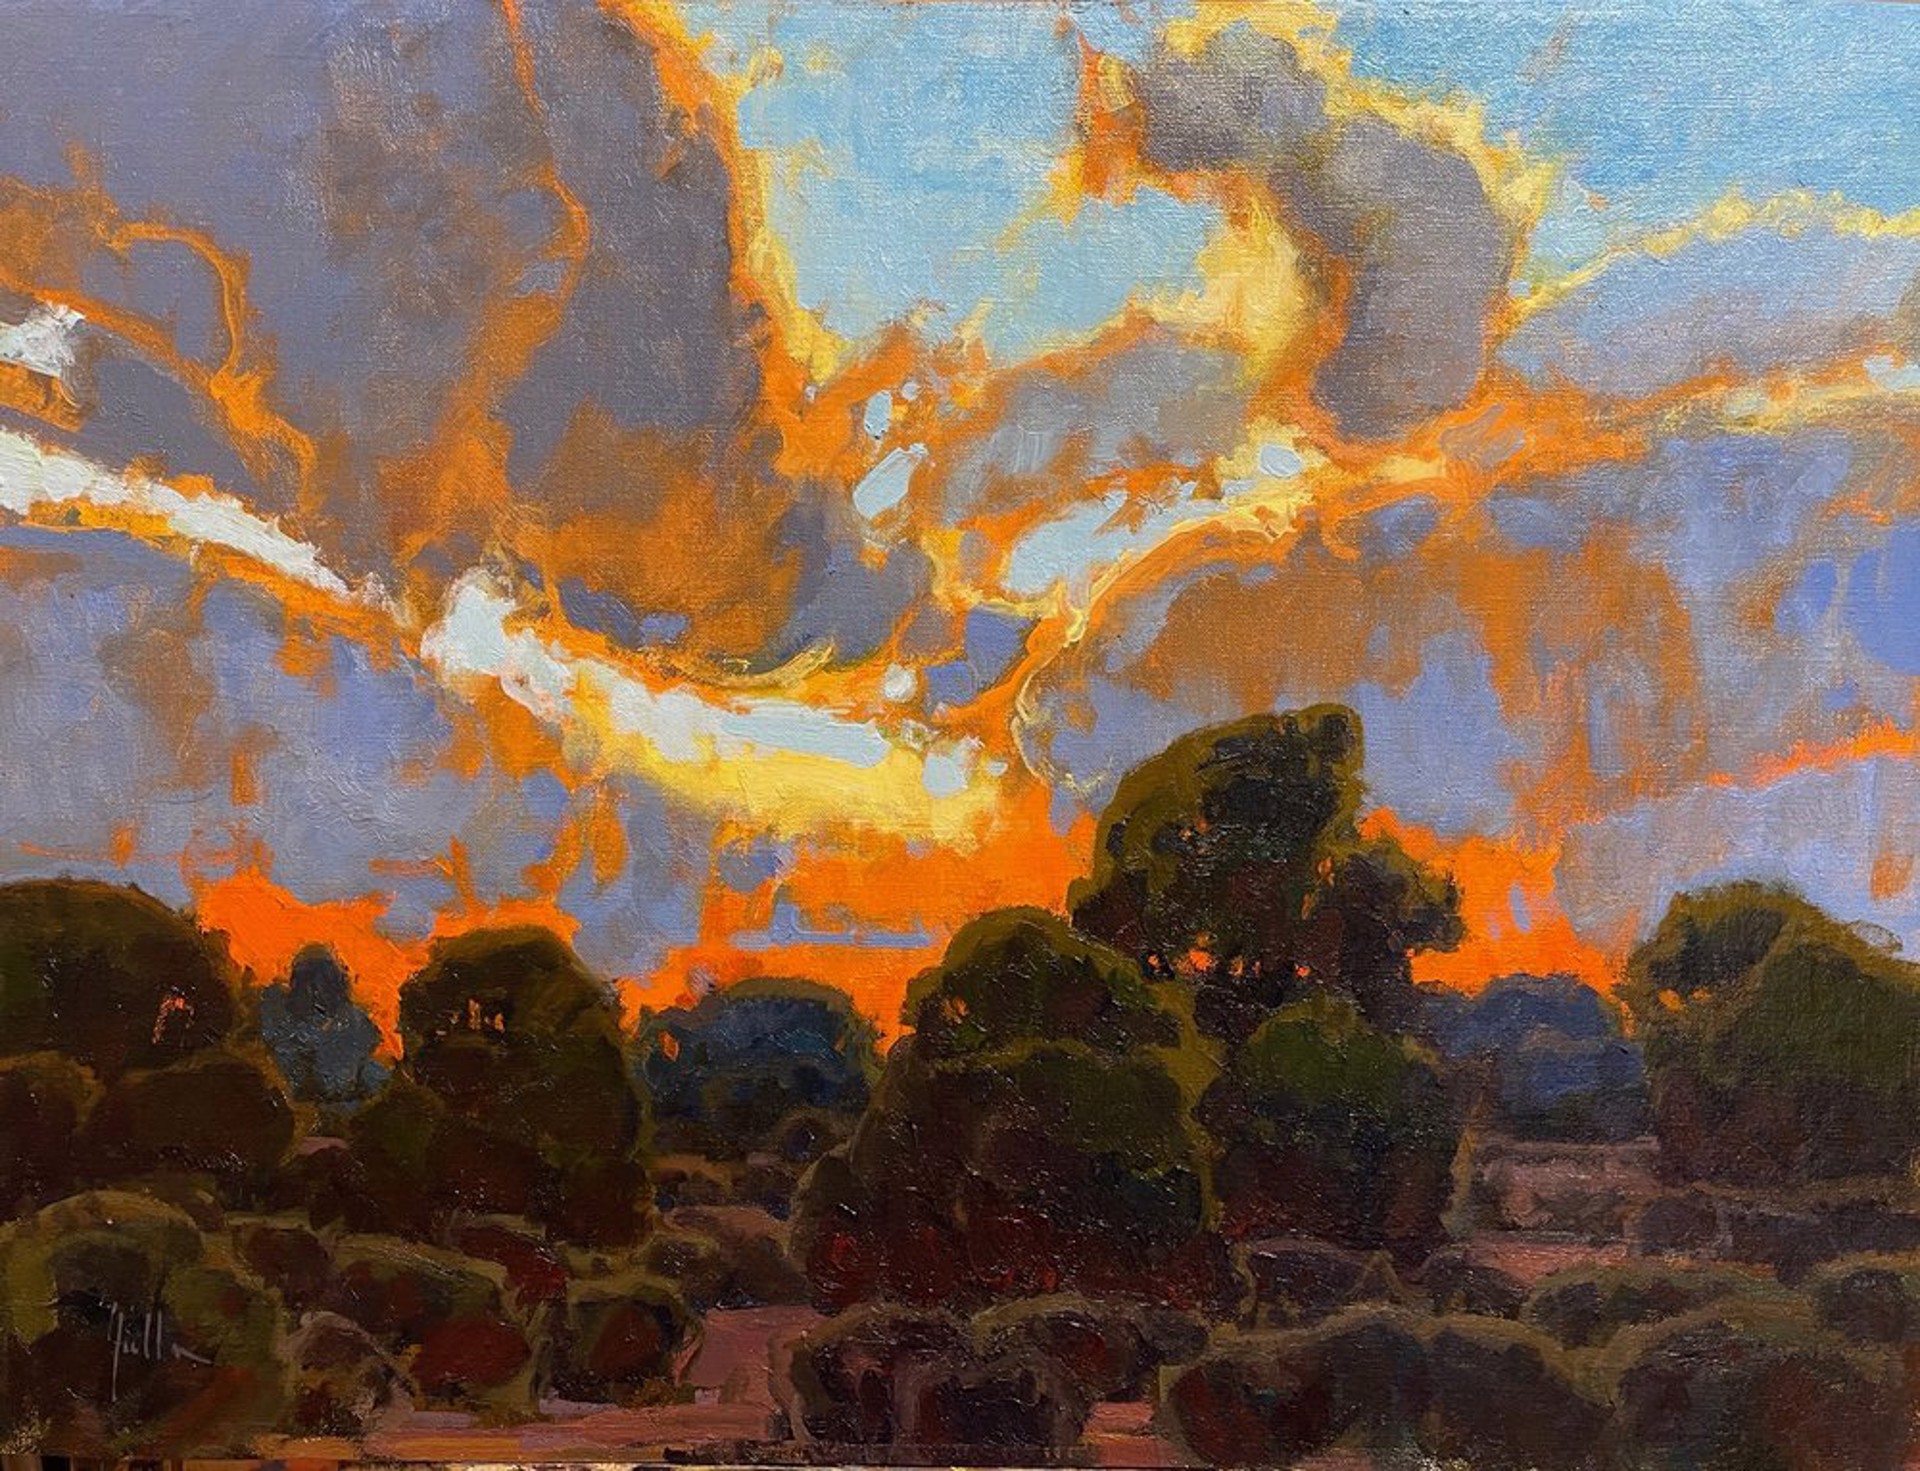 Sunset Pattern by Bill Gallen